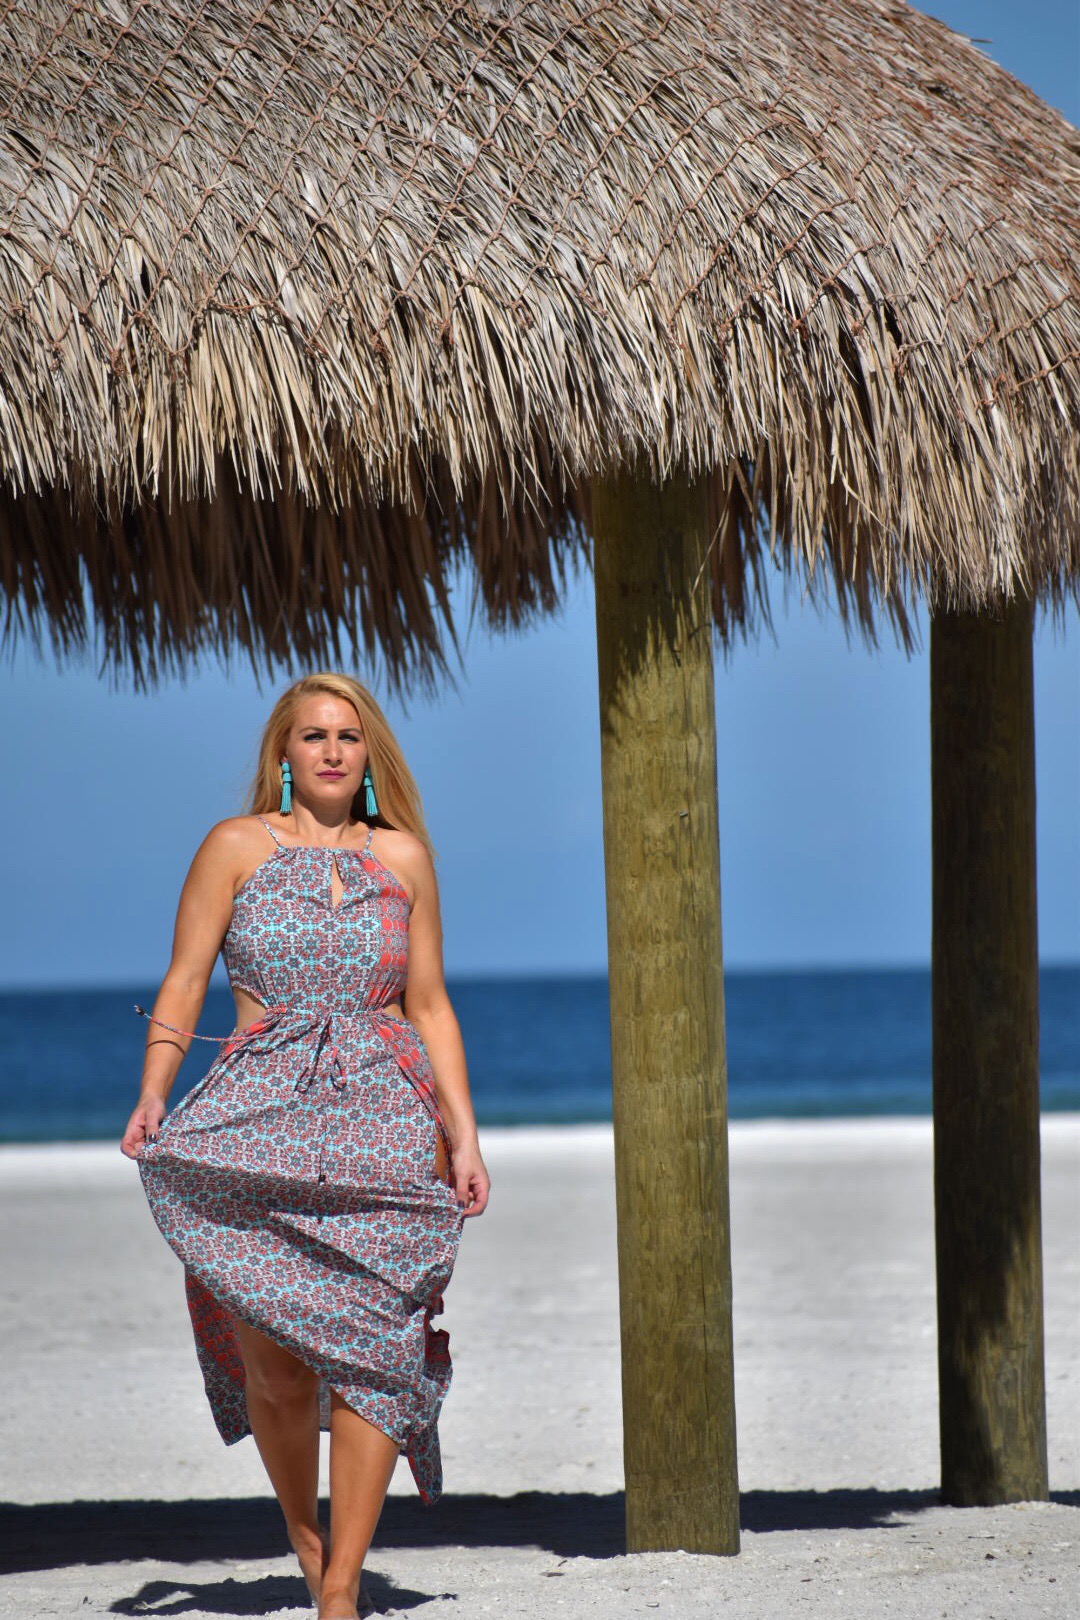 Raga Dress, Boho Chic, Halter Dress, Bohemian Style Dress with Tassel Earrings in Marco Island Florida